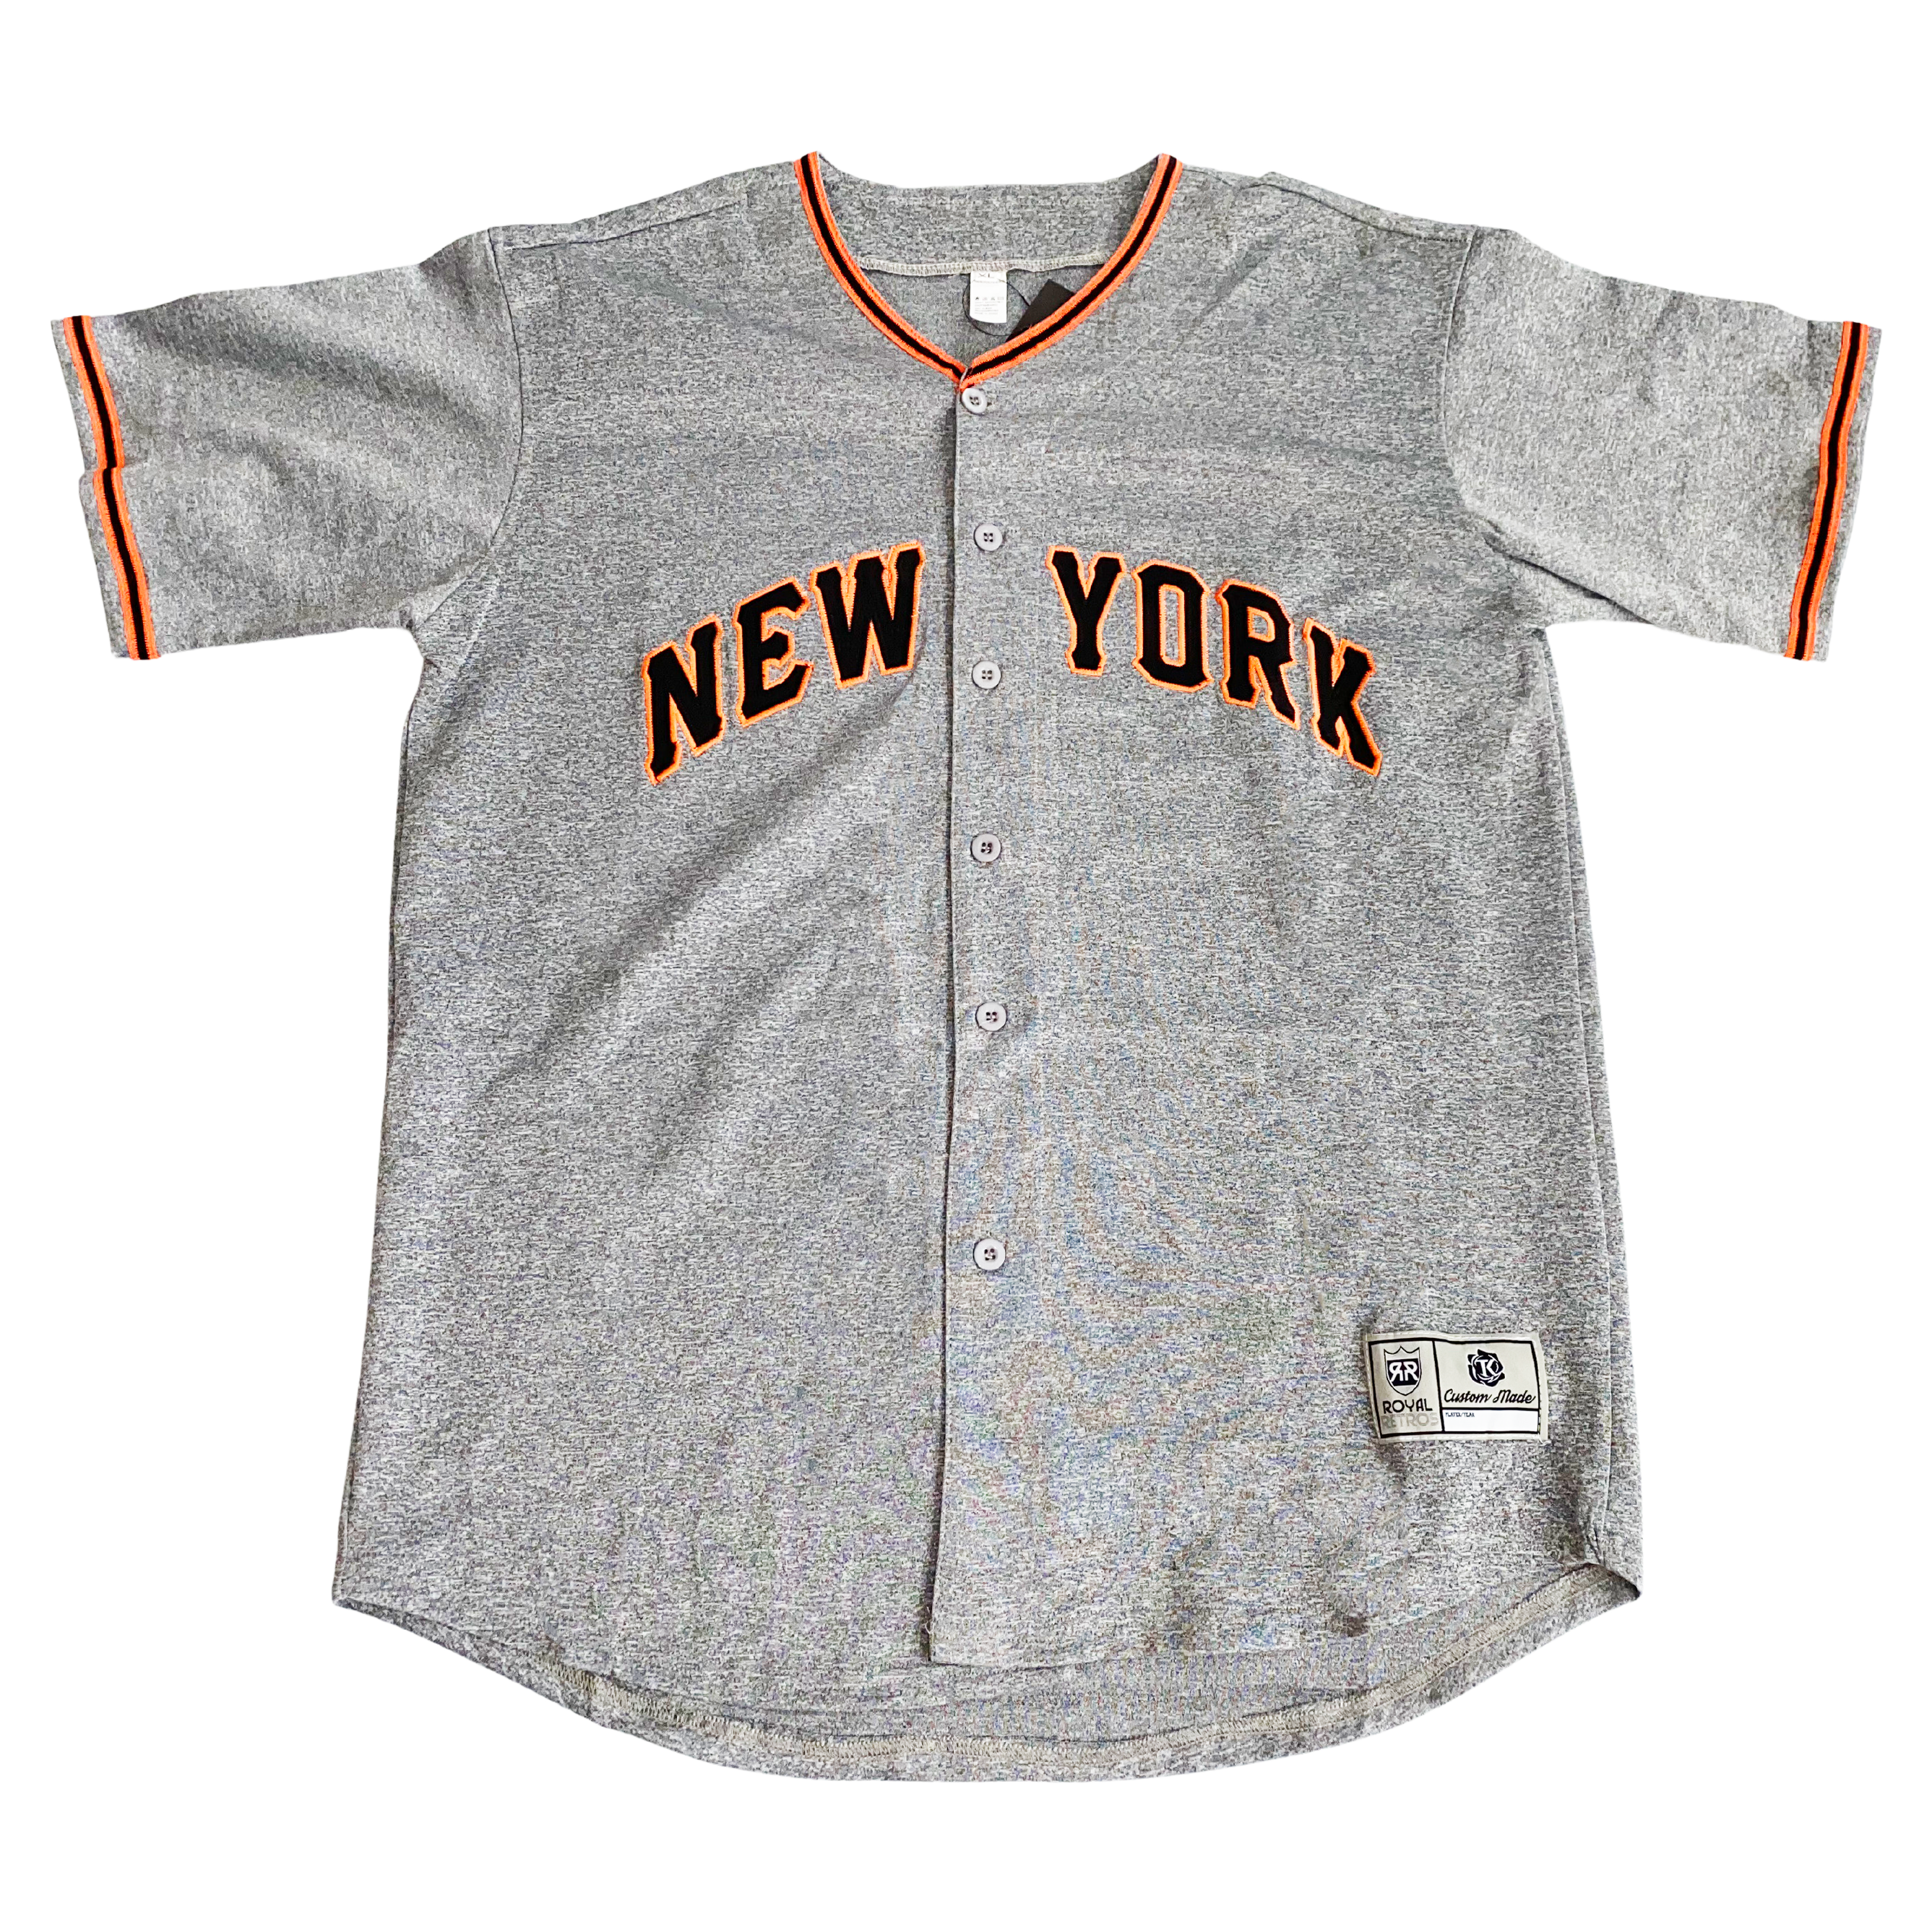 Collectible New York Yankees Jerseys for sale near Philadelphia